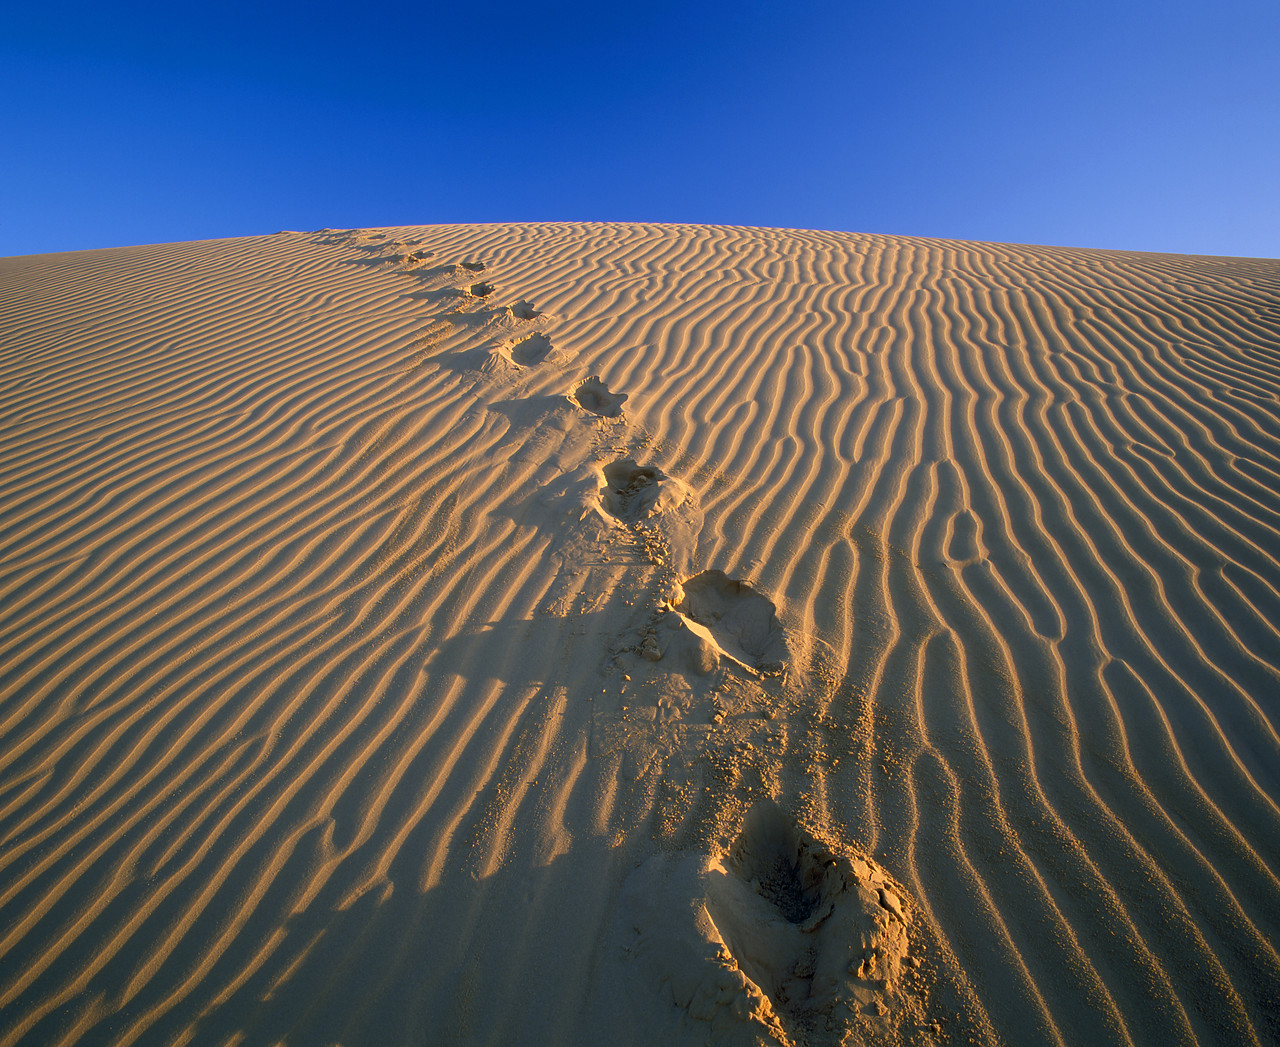 #980506-1 - Footprints in Sand Dune, Algondones Dunes Wilderness, California, USA